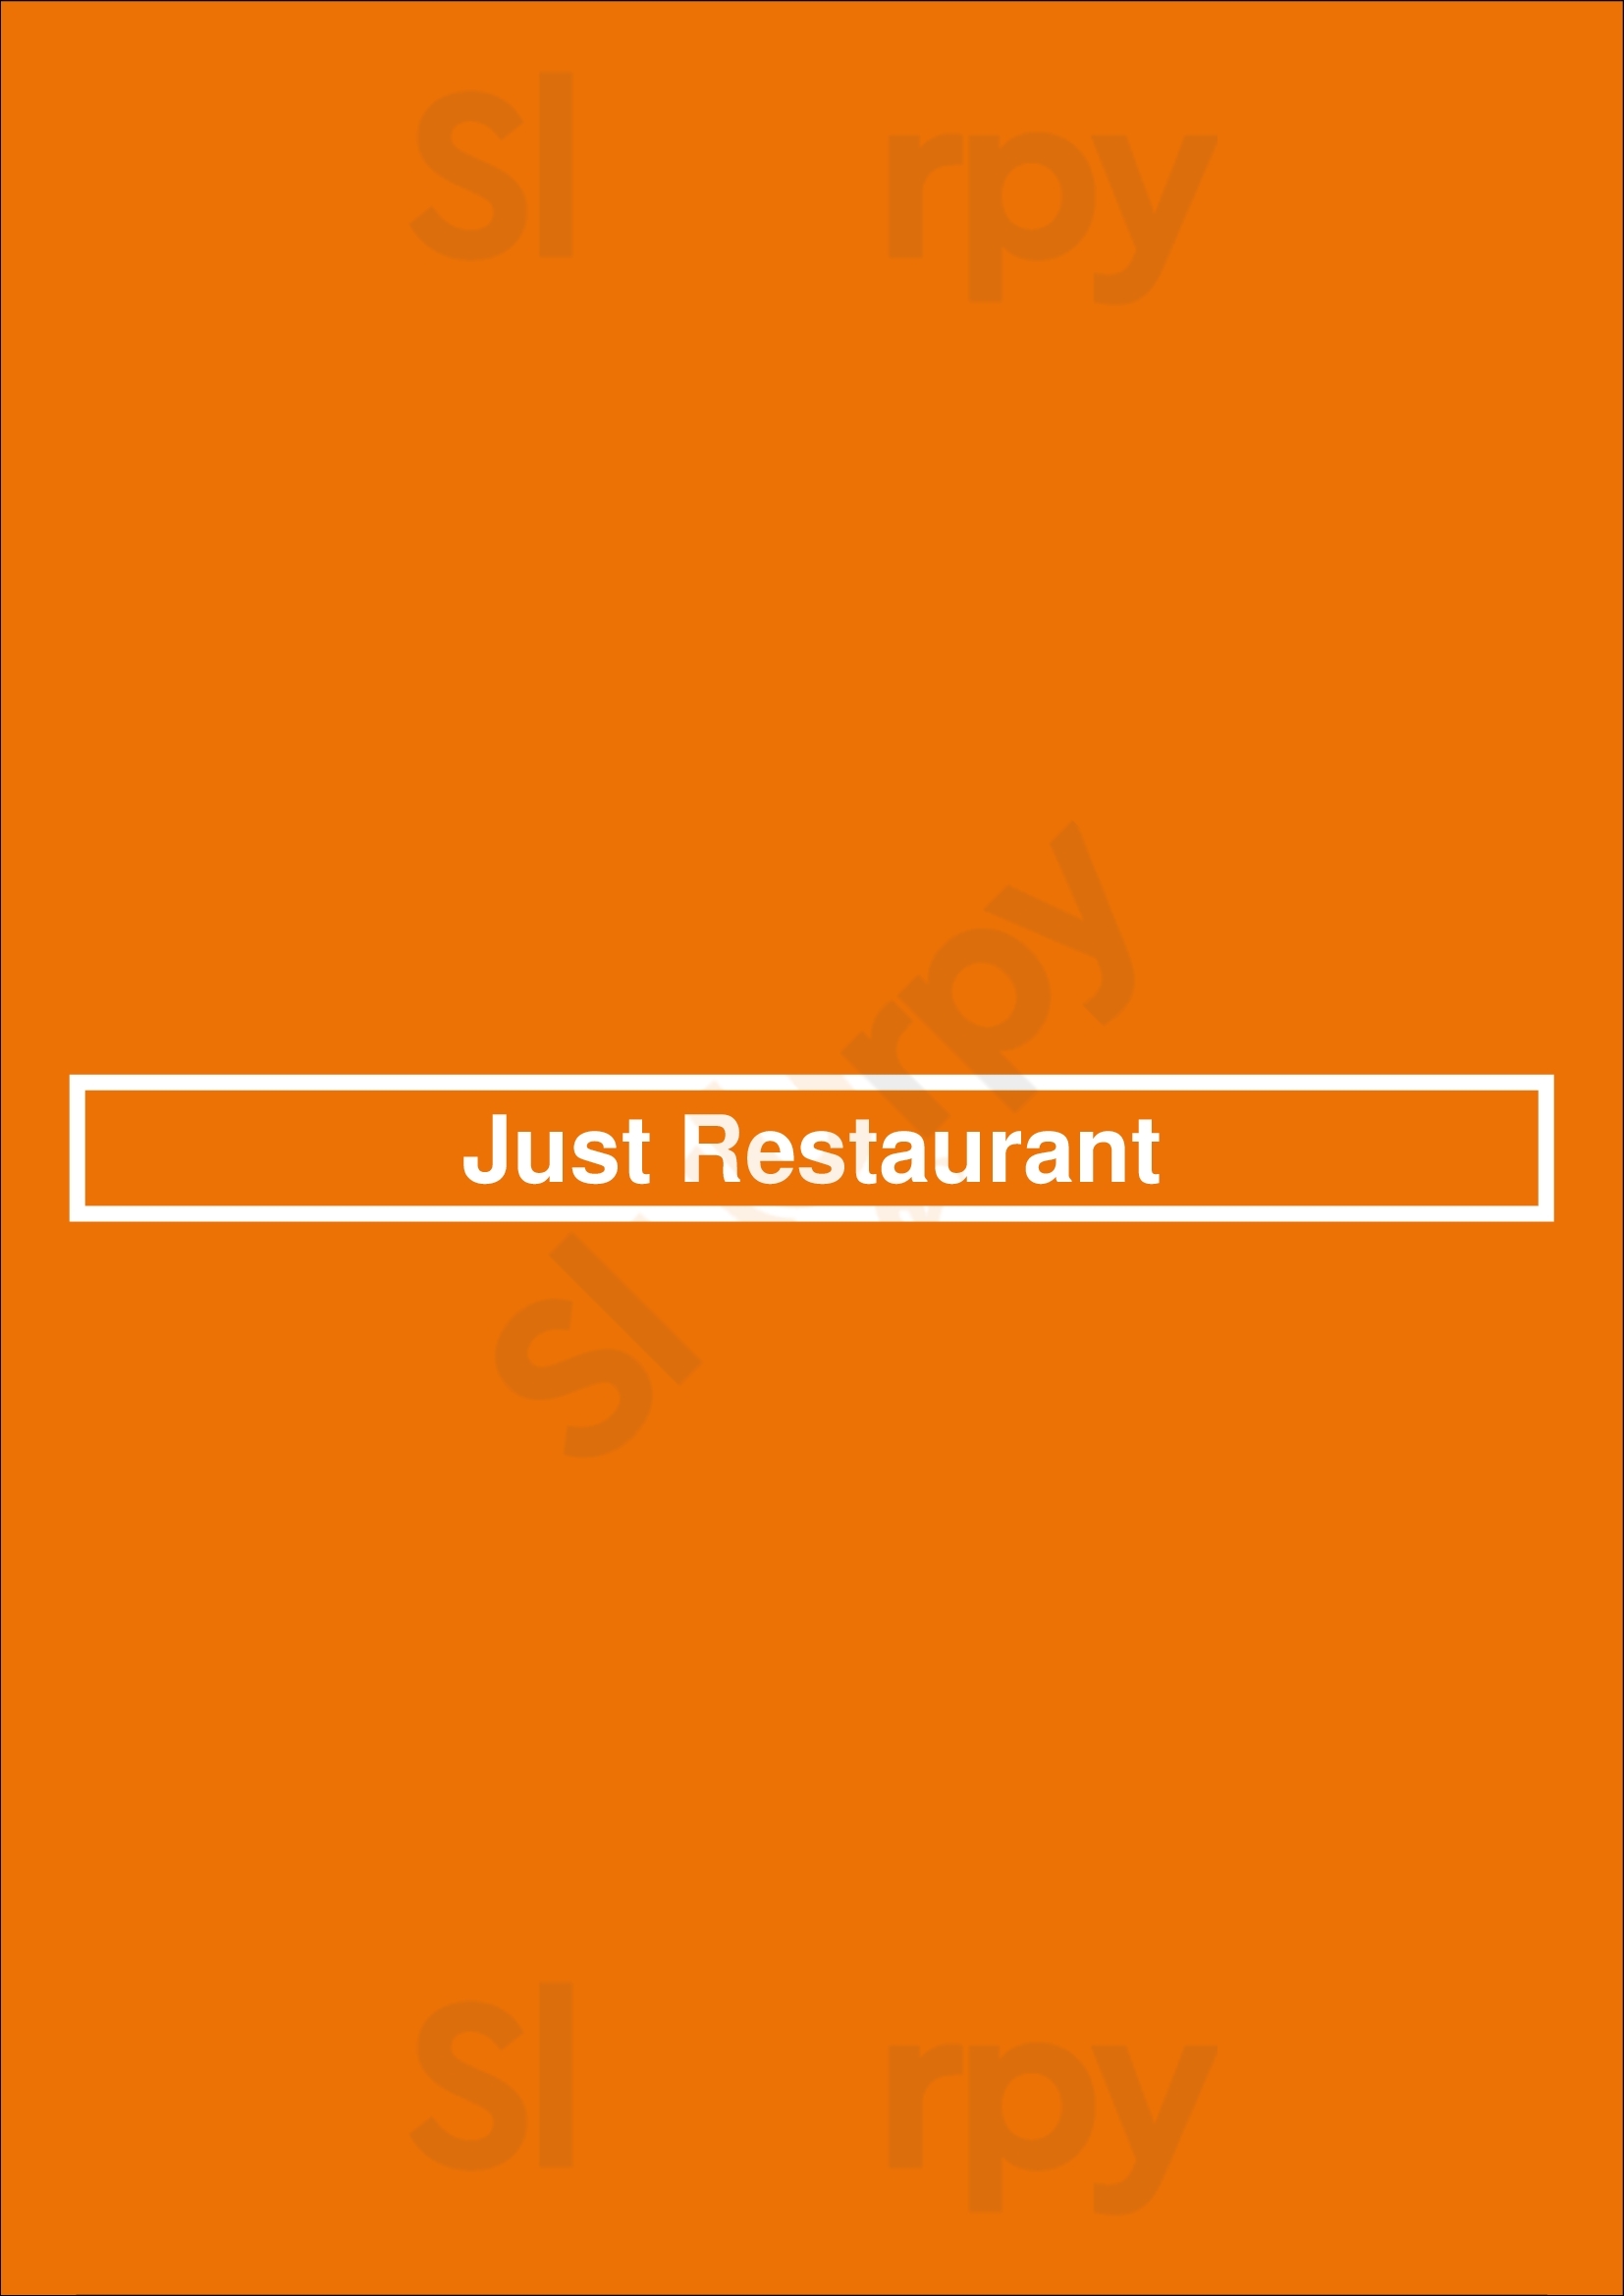 Just Restaurant Rotterdam Menu - 1